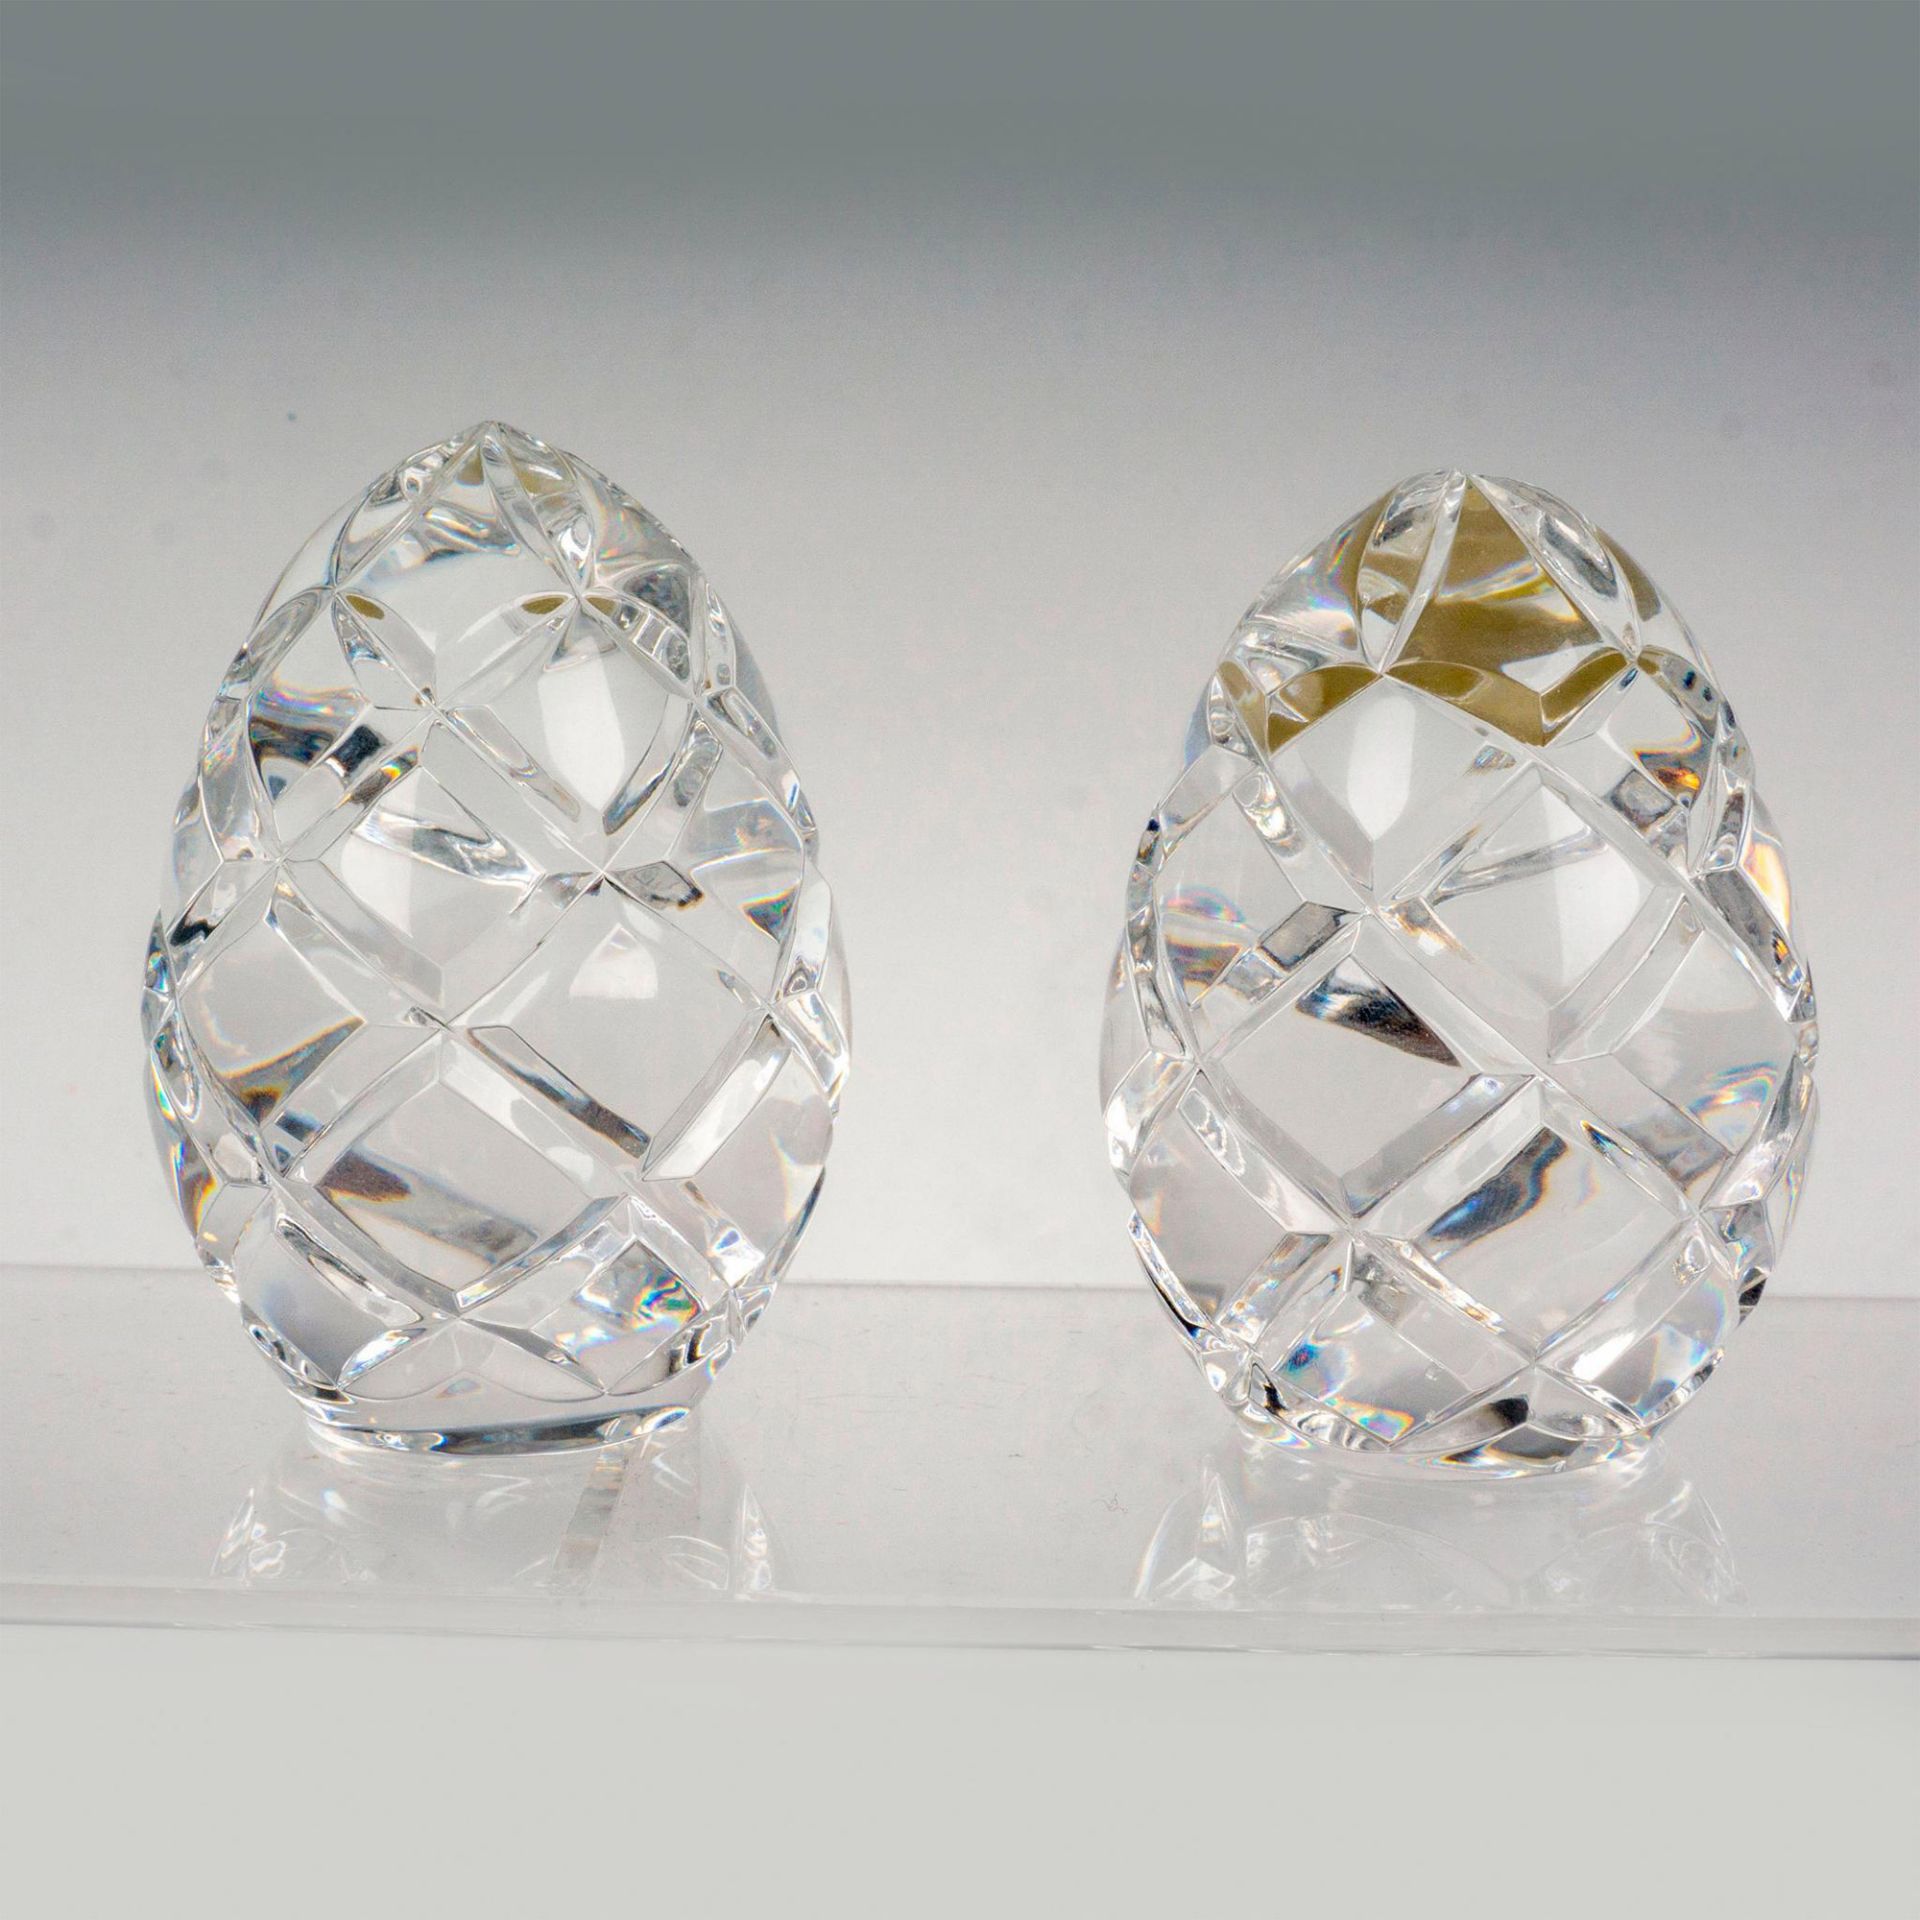 Pair of Gorham Crystal Egg Paperweights